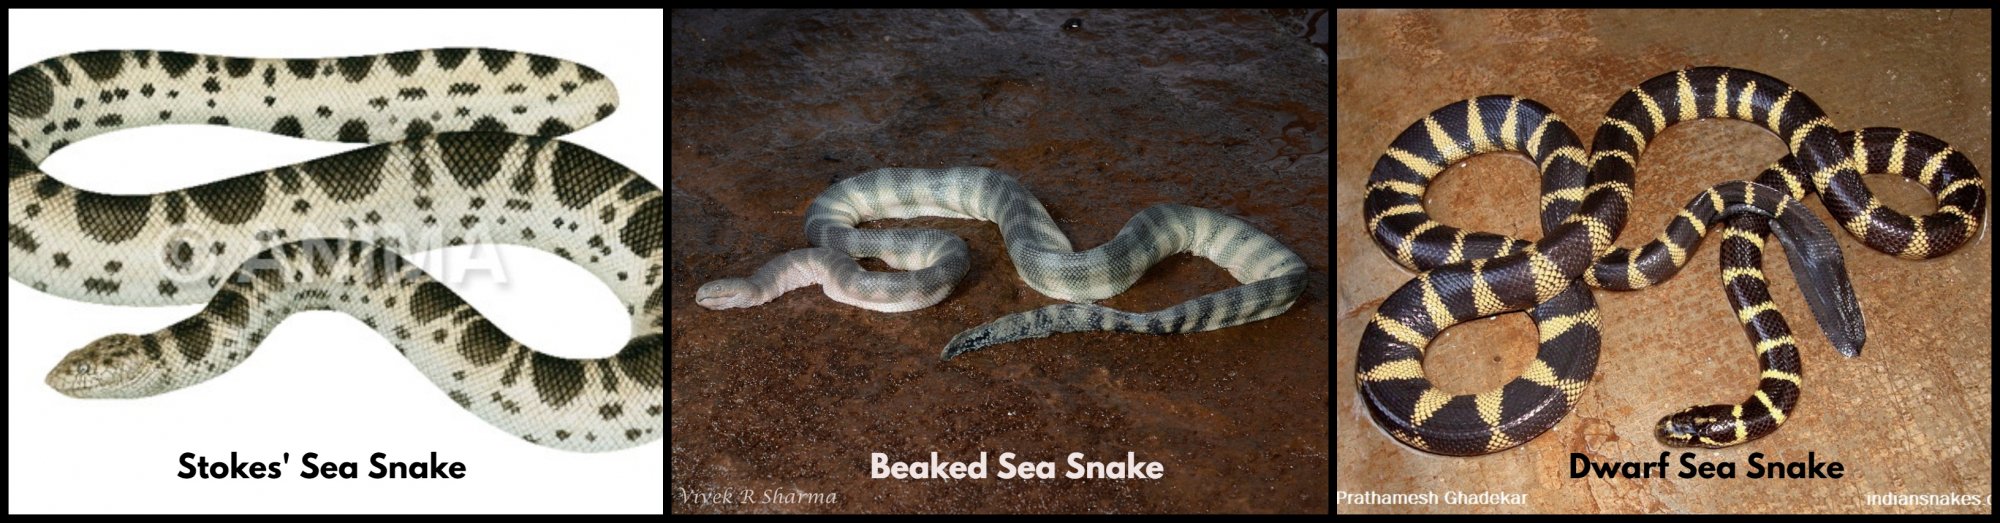 Sea Snake 1.jpg